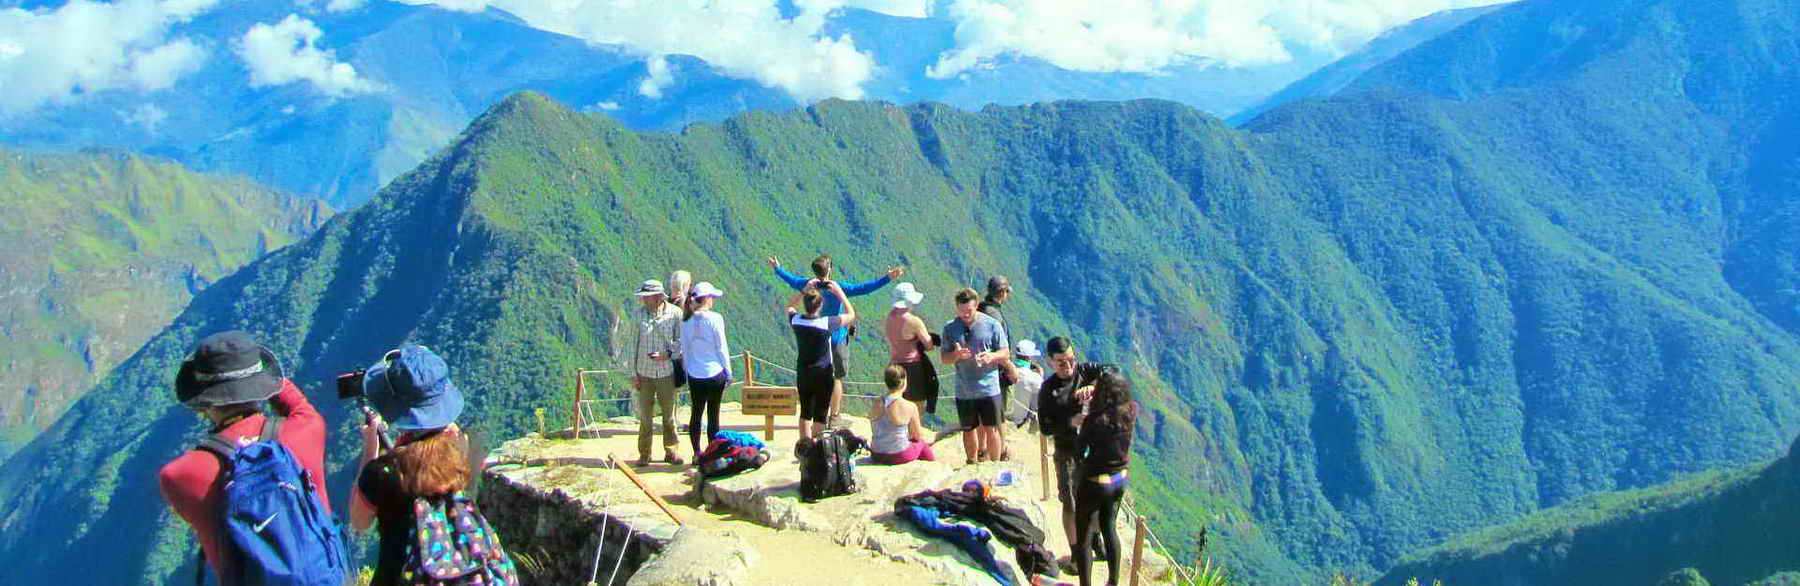 15 дней: Лима - Паракас - Наска - Куско - Мачу Пикчу - Марас - Радужные горы - Пуно - Арекипа - Колка